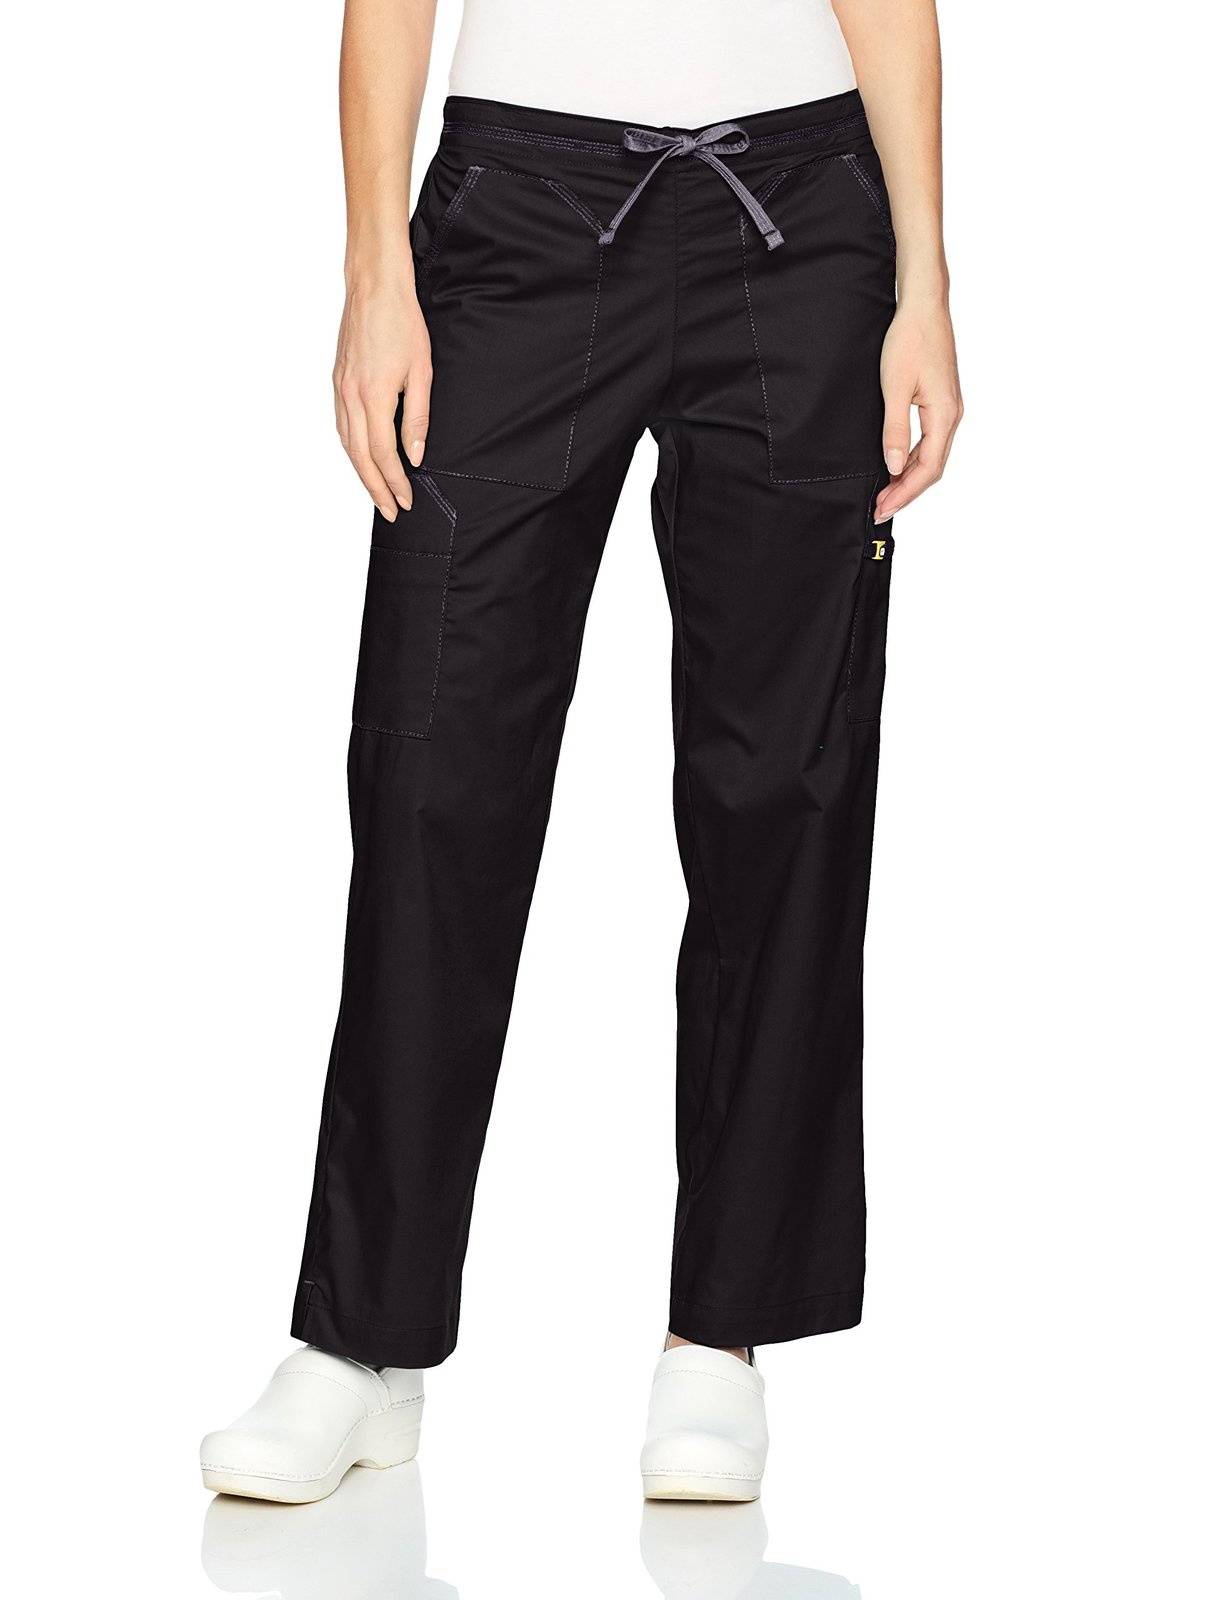 WonderWink Women's Utility Cargo Pant Black Medium Tall - Pants